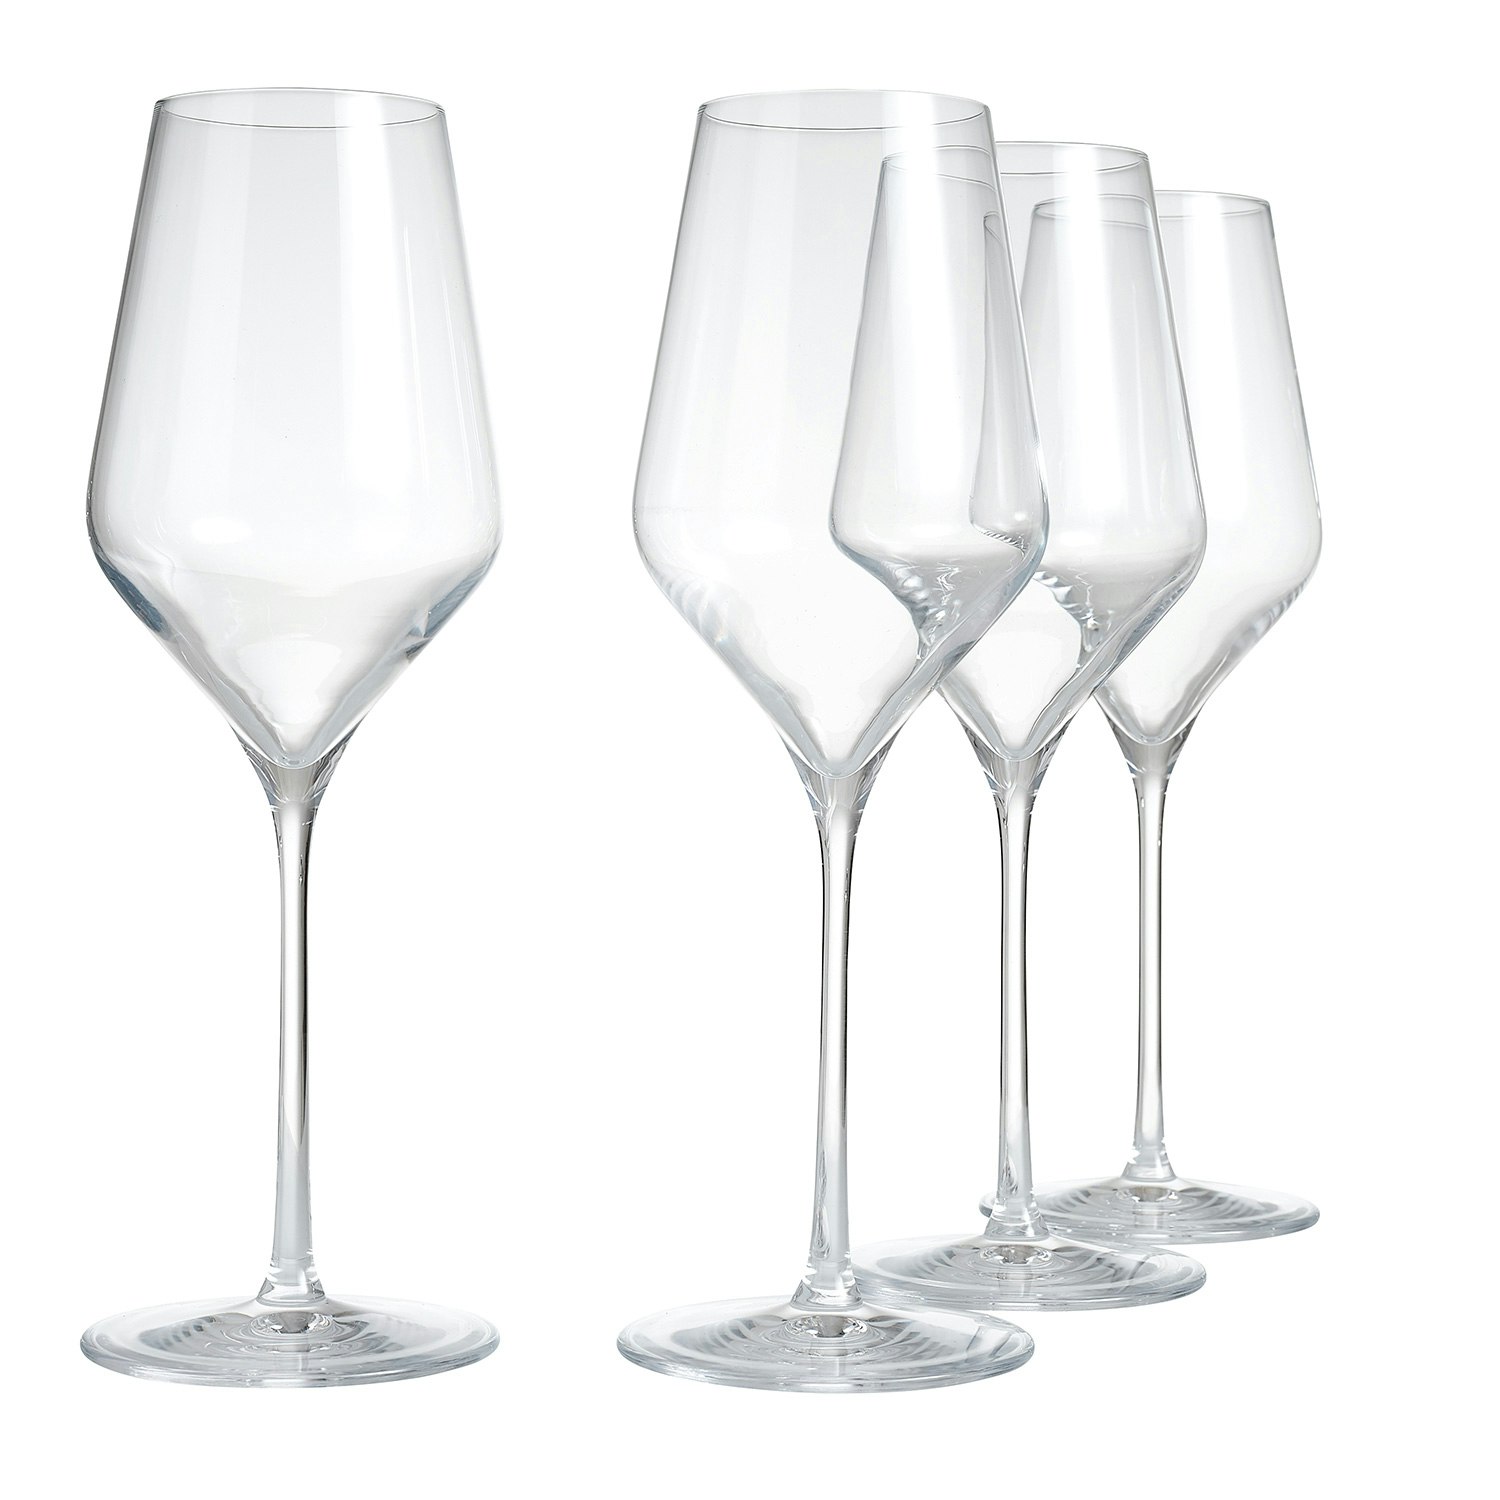 https://royaldesign.com/image/2/aida-connoisseur-extravagant-white-wine-glass-645-cl-4-pack-0